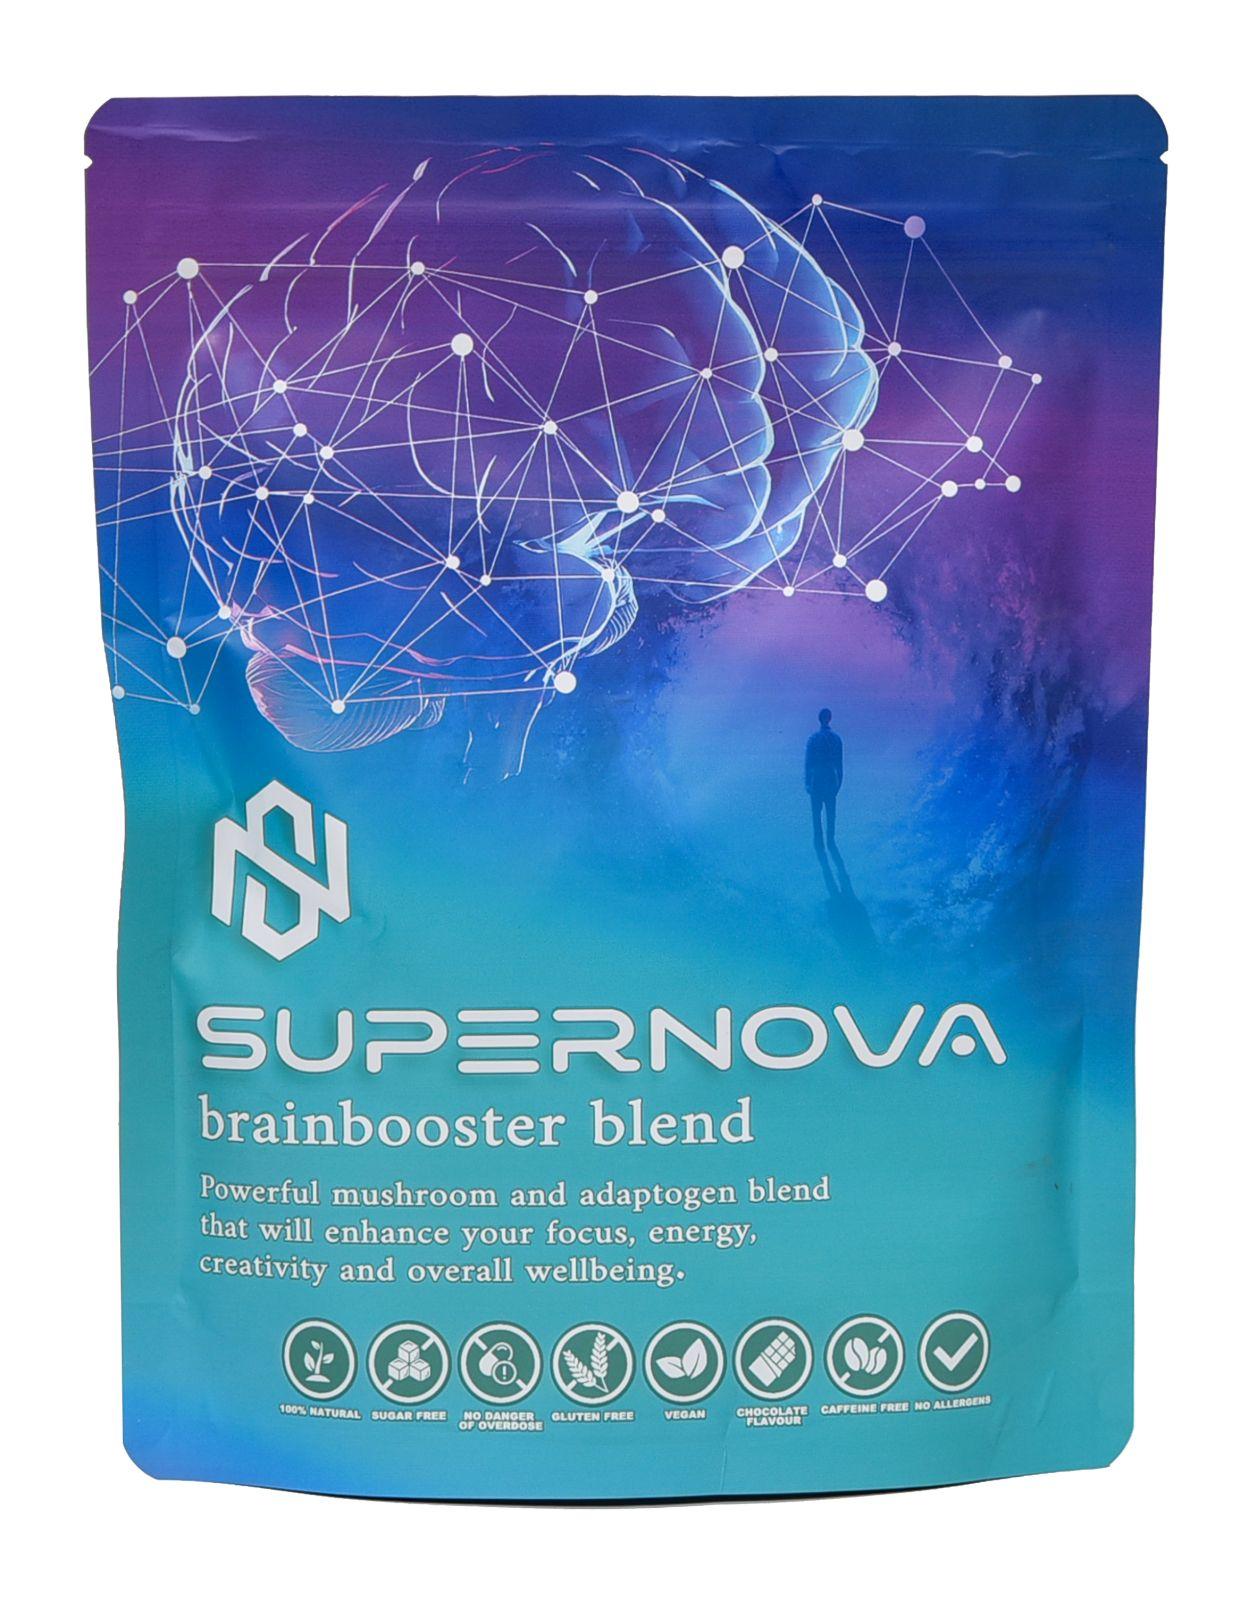 SUPER NOVA Mоќен какао напиток Brainbooster blend. 100% природно